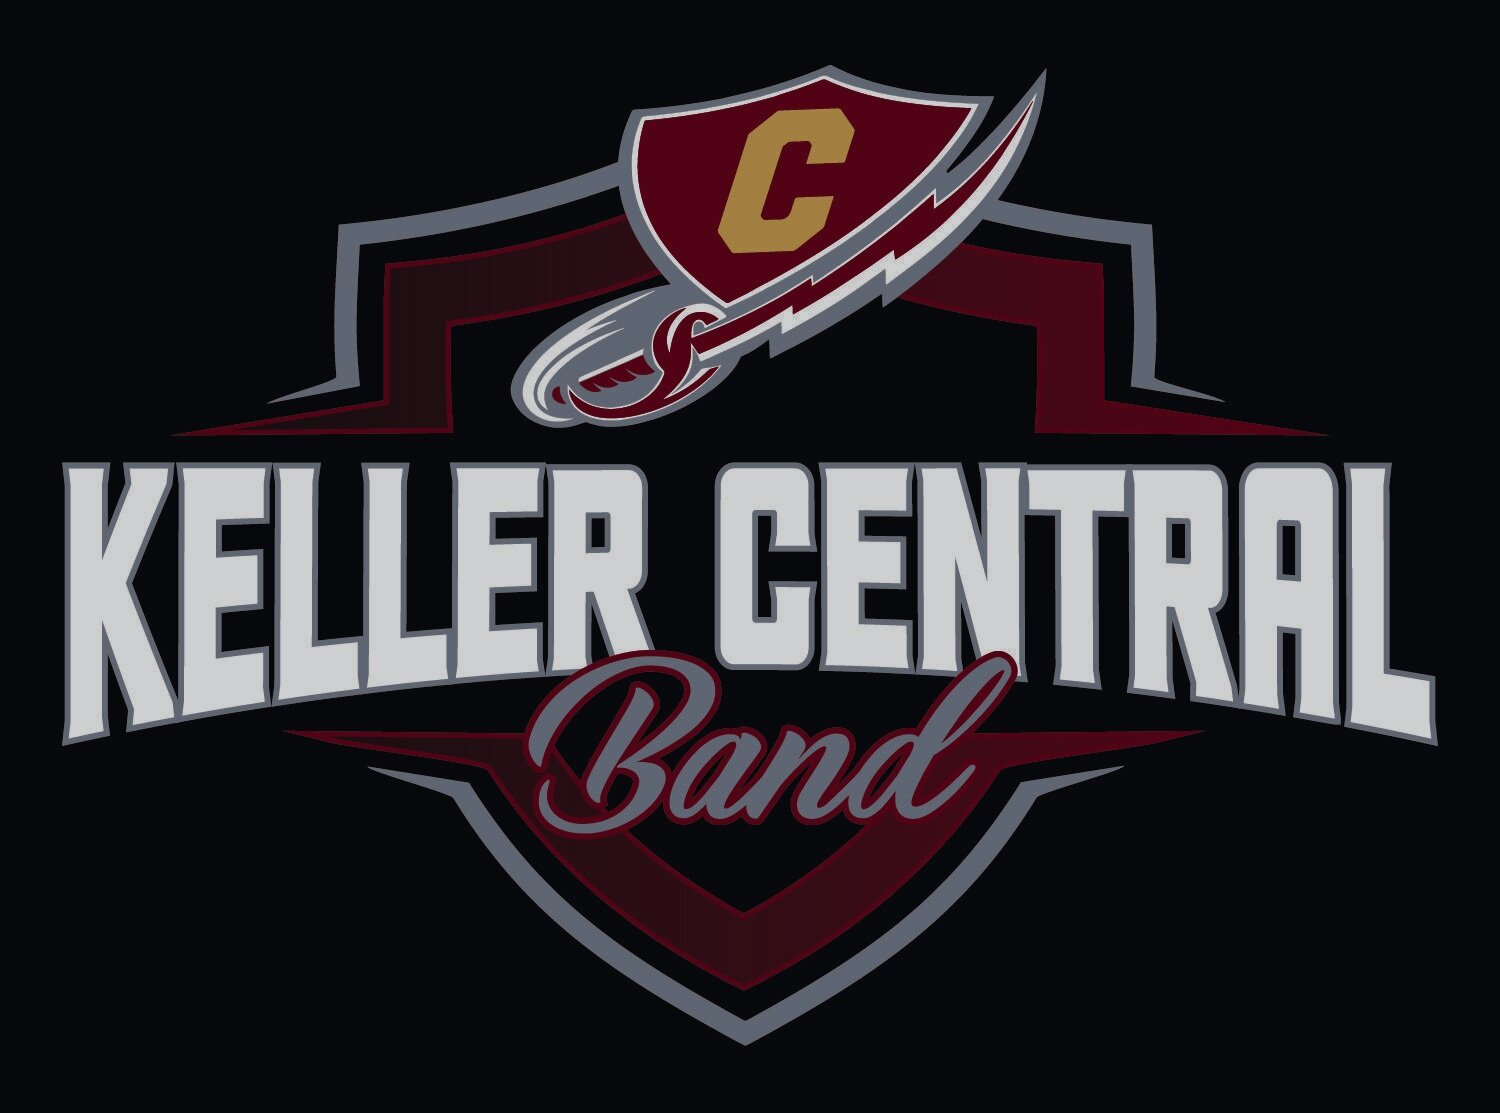 Keller Central High School Band